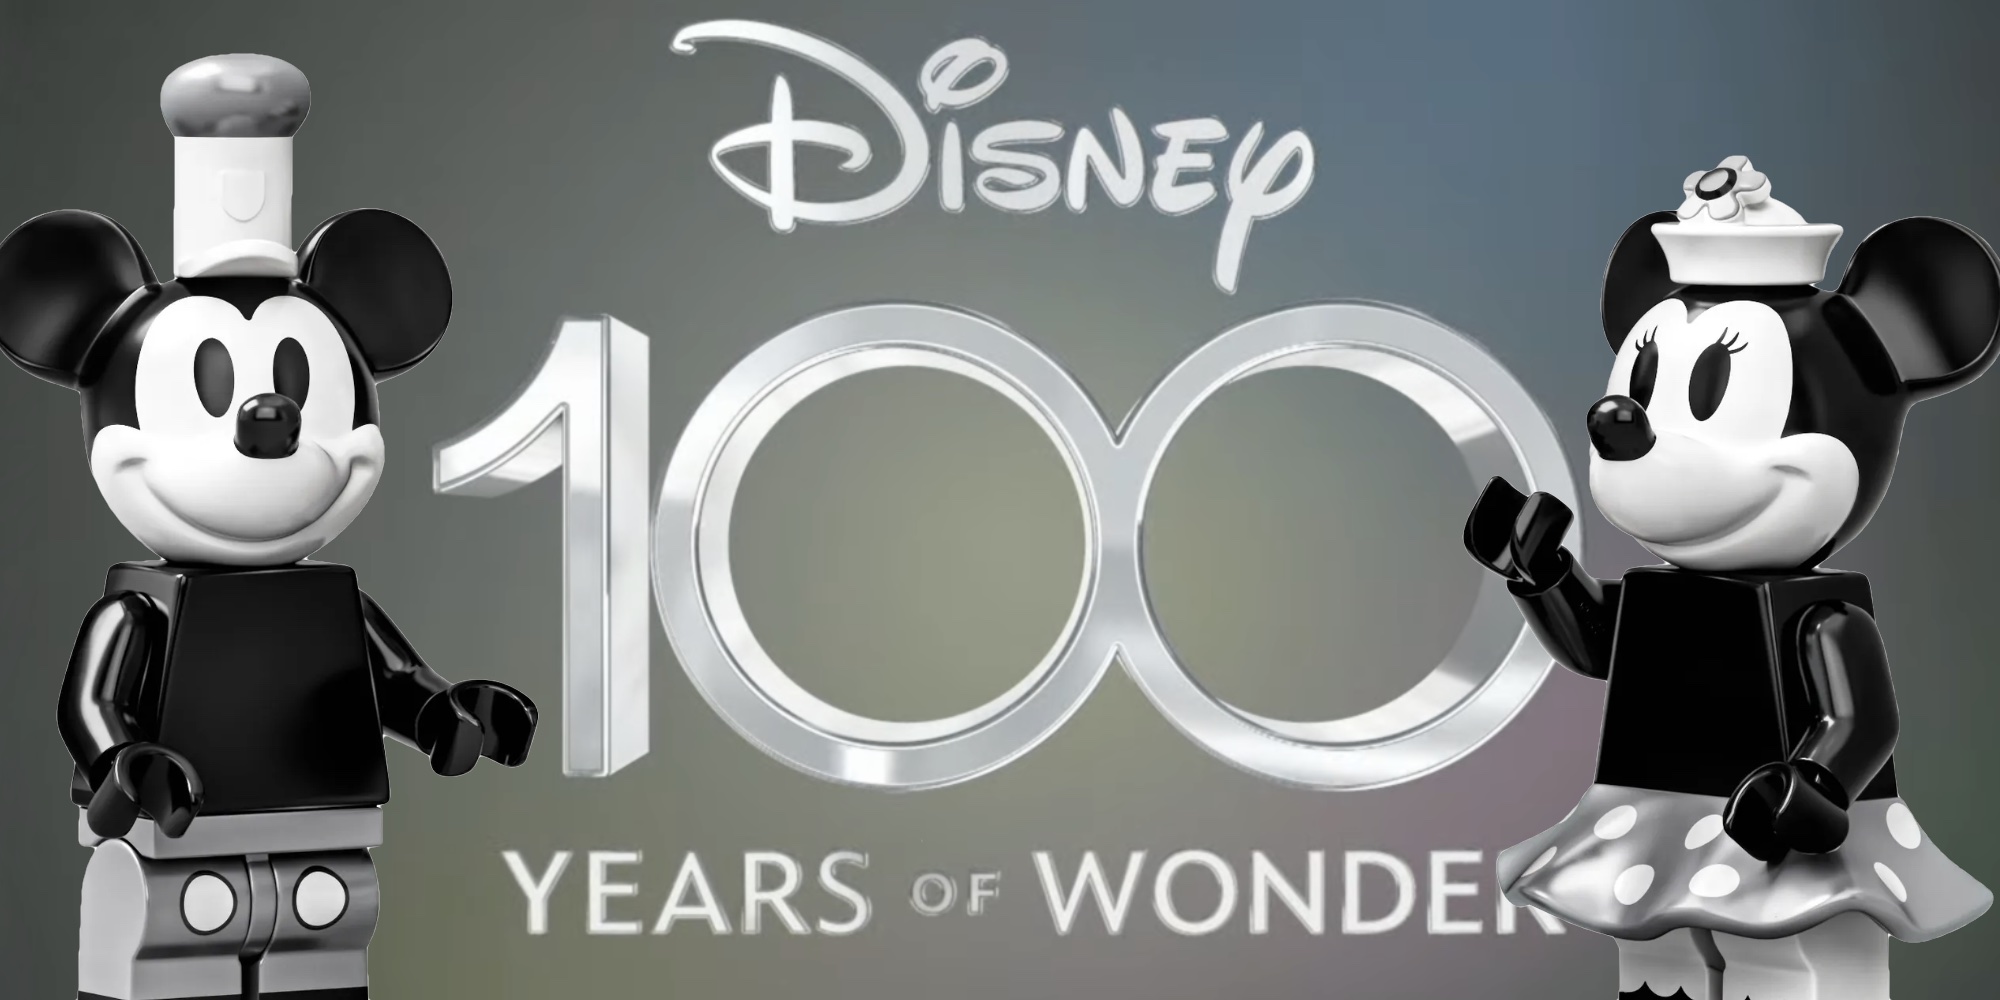 Disney 100, LEGO®, Disney